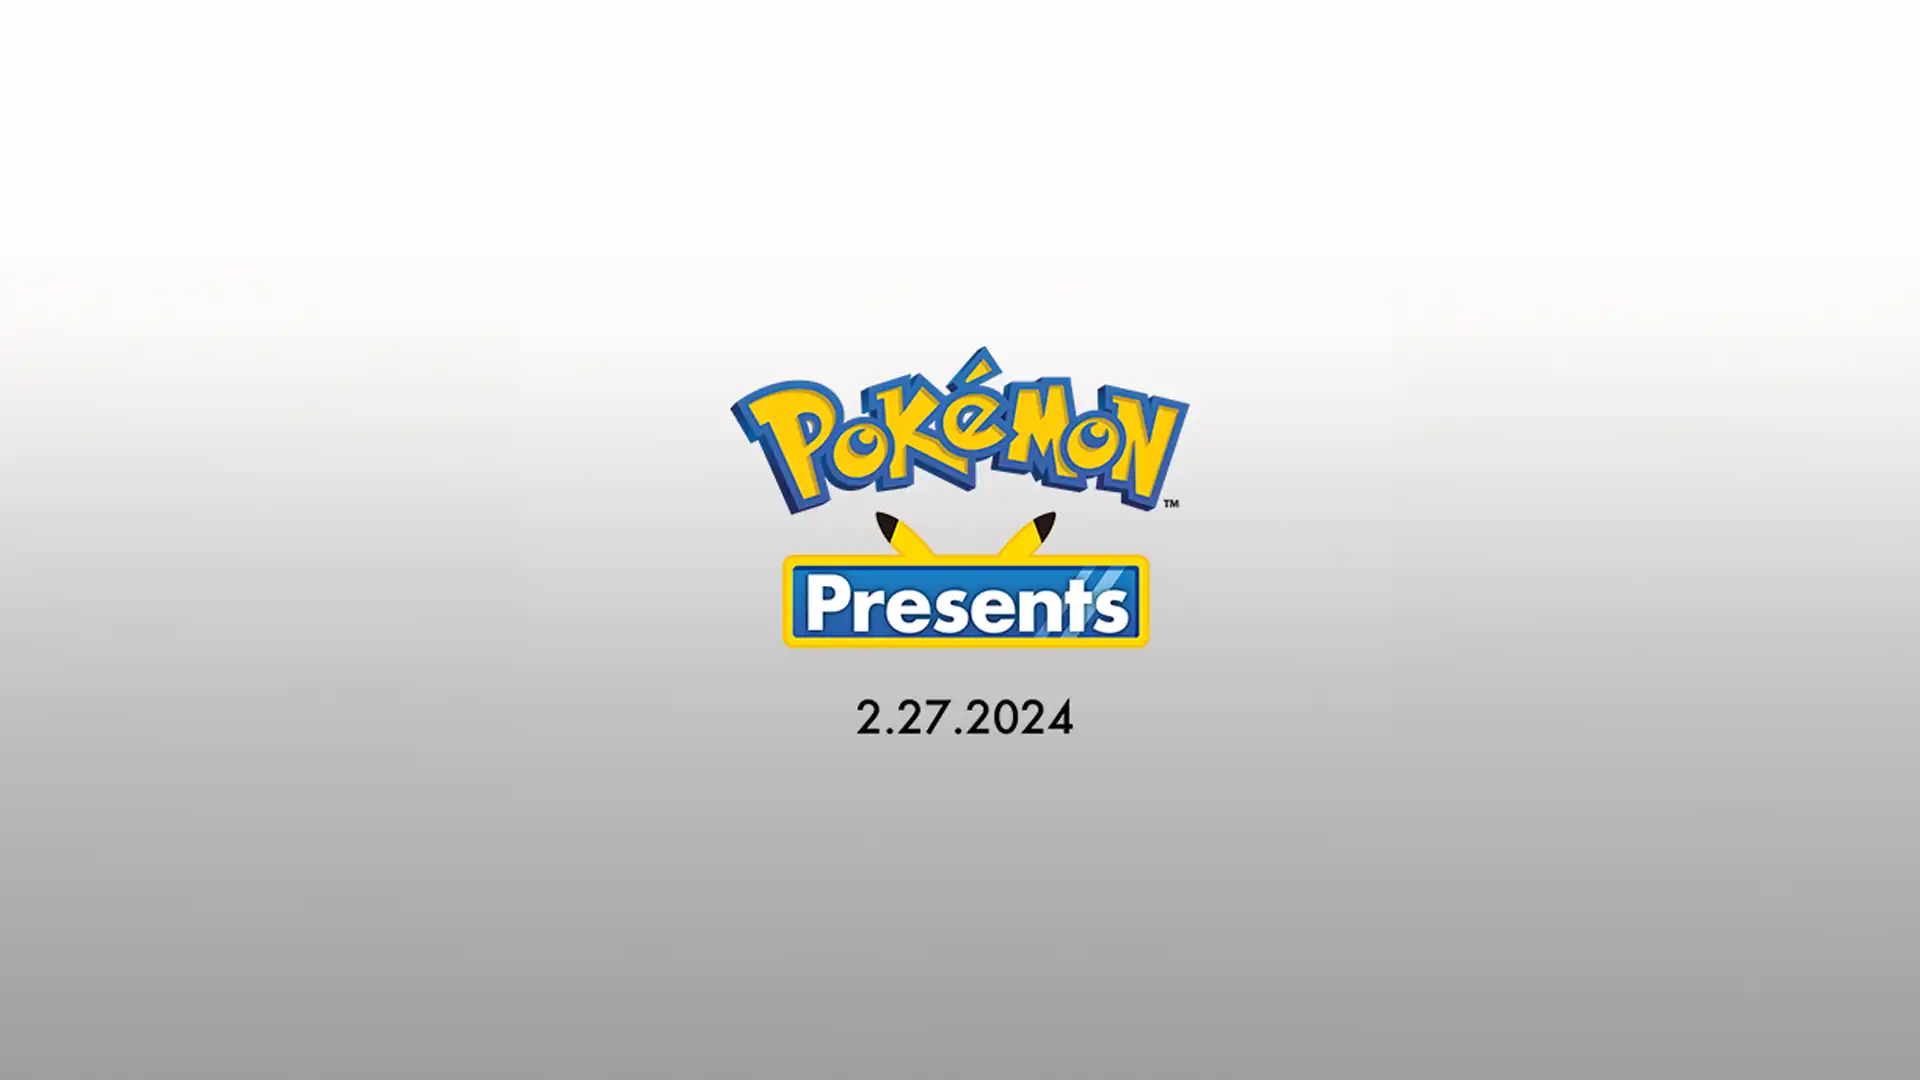 Pokemon Company annonce un Pokemon Presents pour la fin du mois